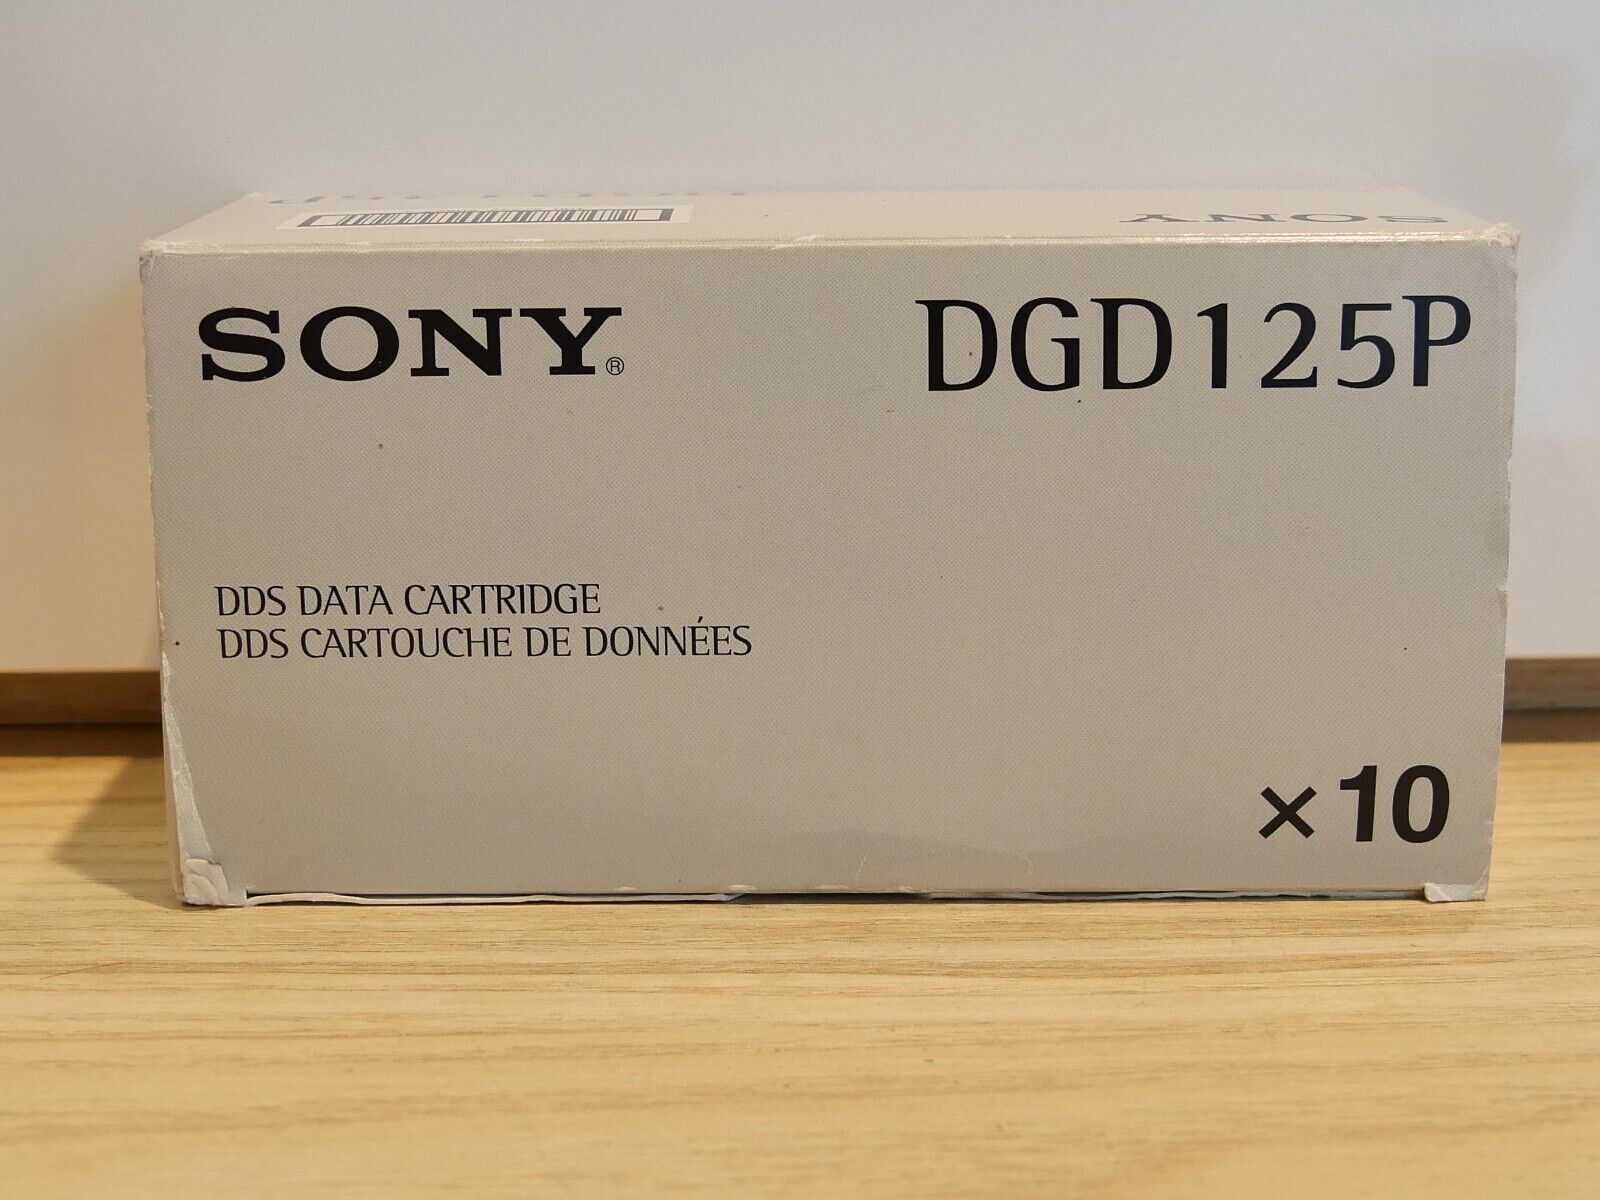 Sony DGD125P DDS-3 Data Catridges - Pack of 10 Sealed Cartridges